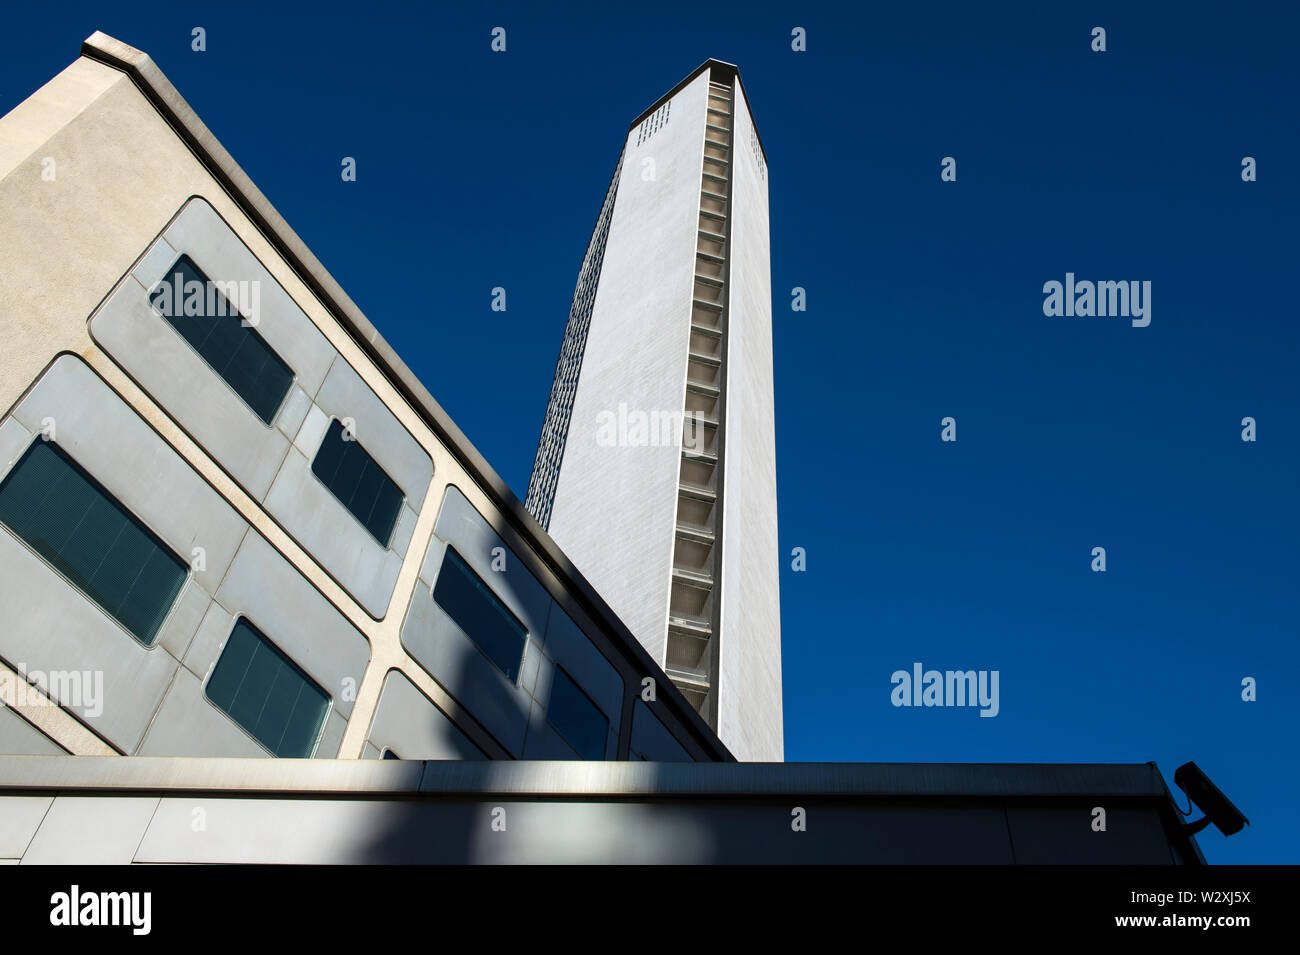 Italy, Lombardy, Milan, detail of the Pirelli skyscraper Stock Photo